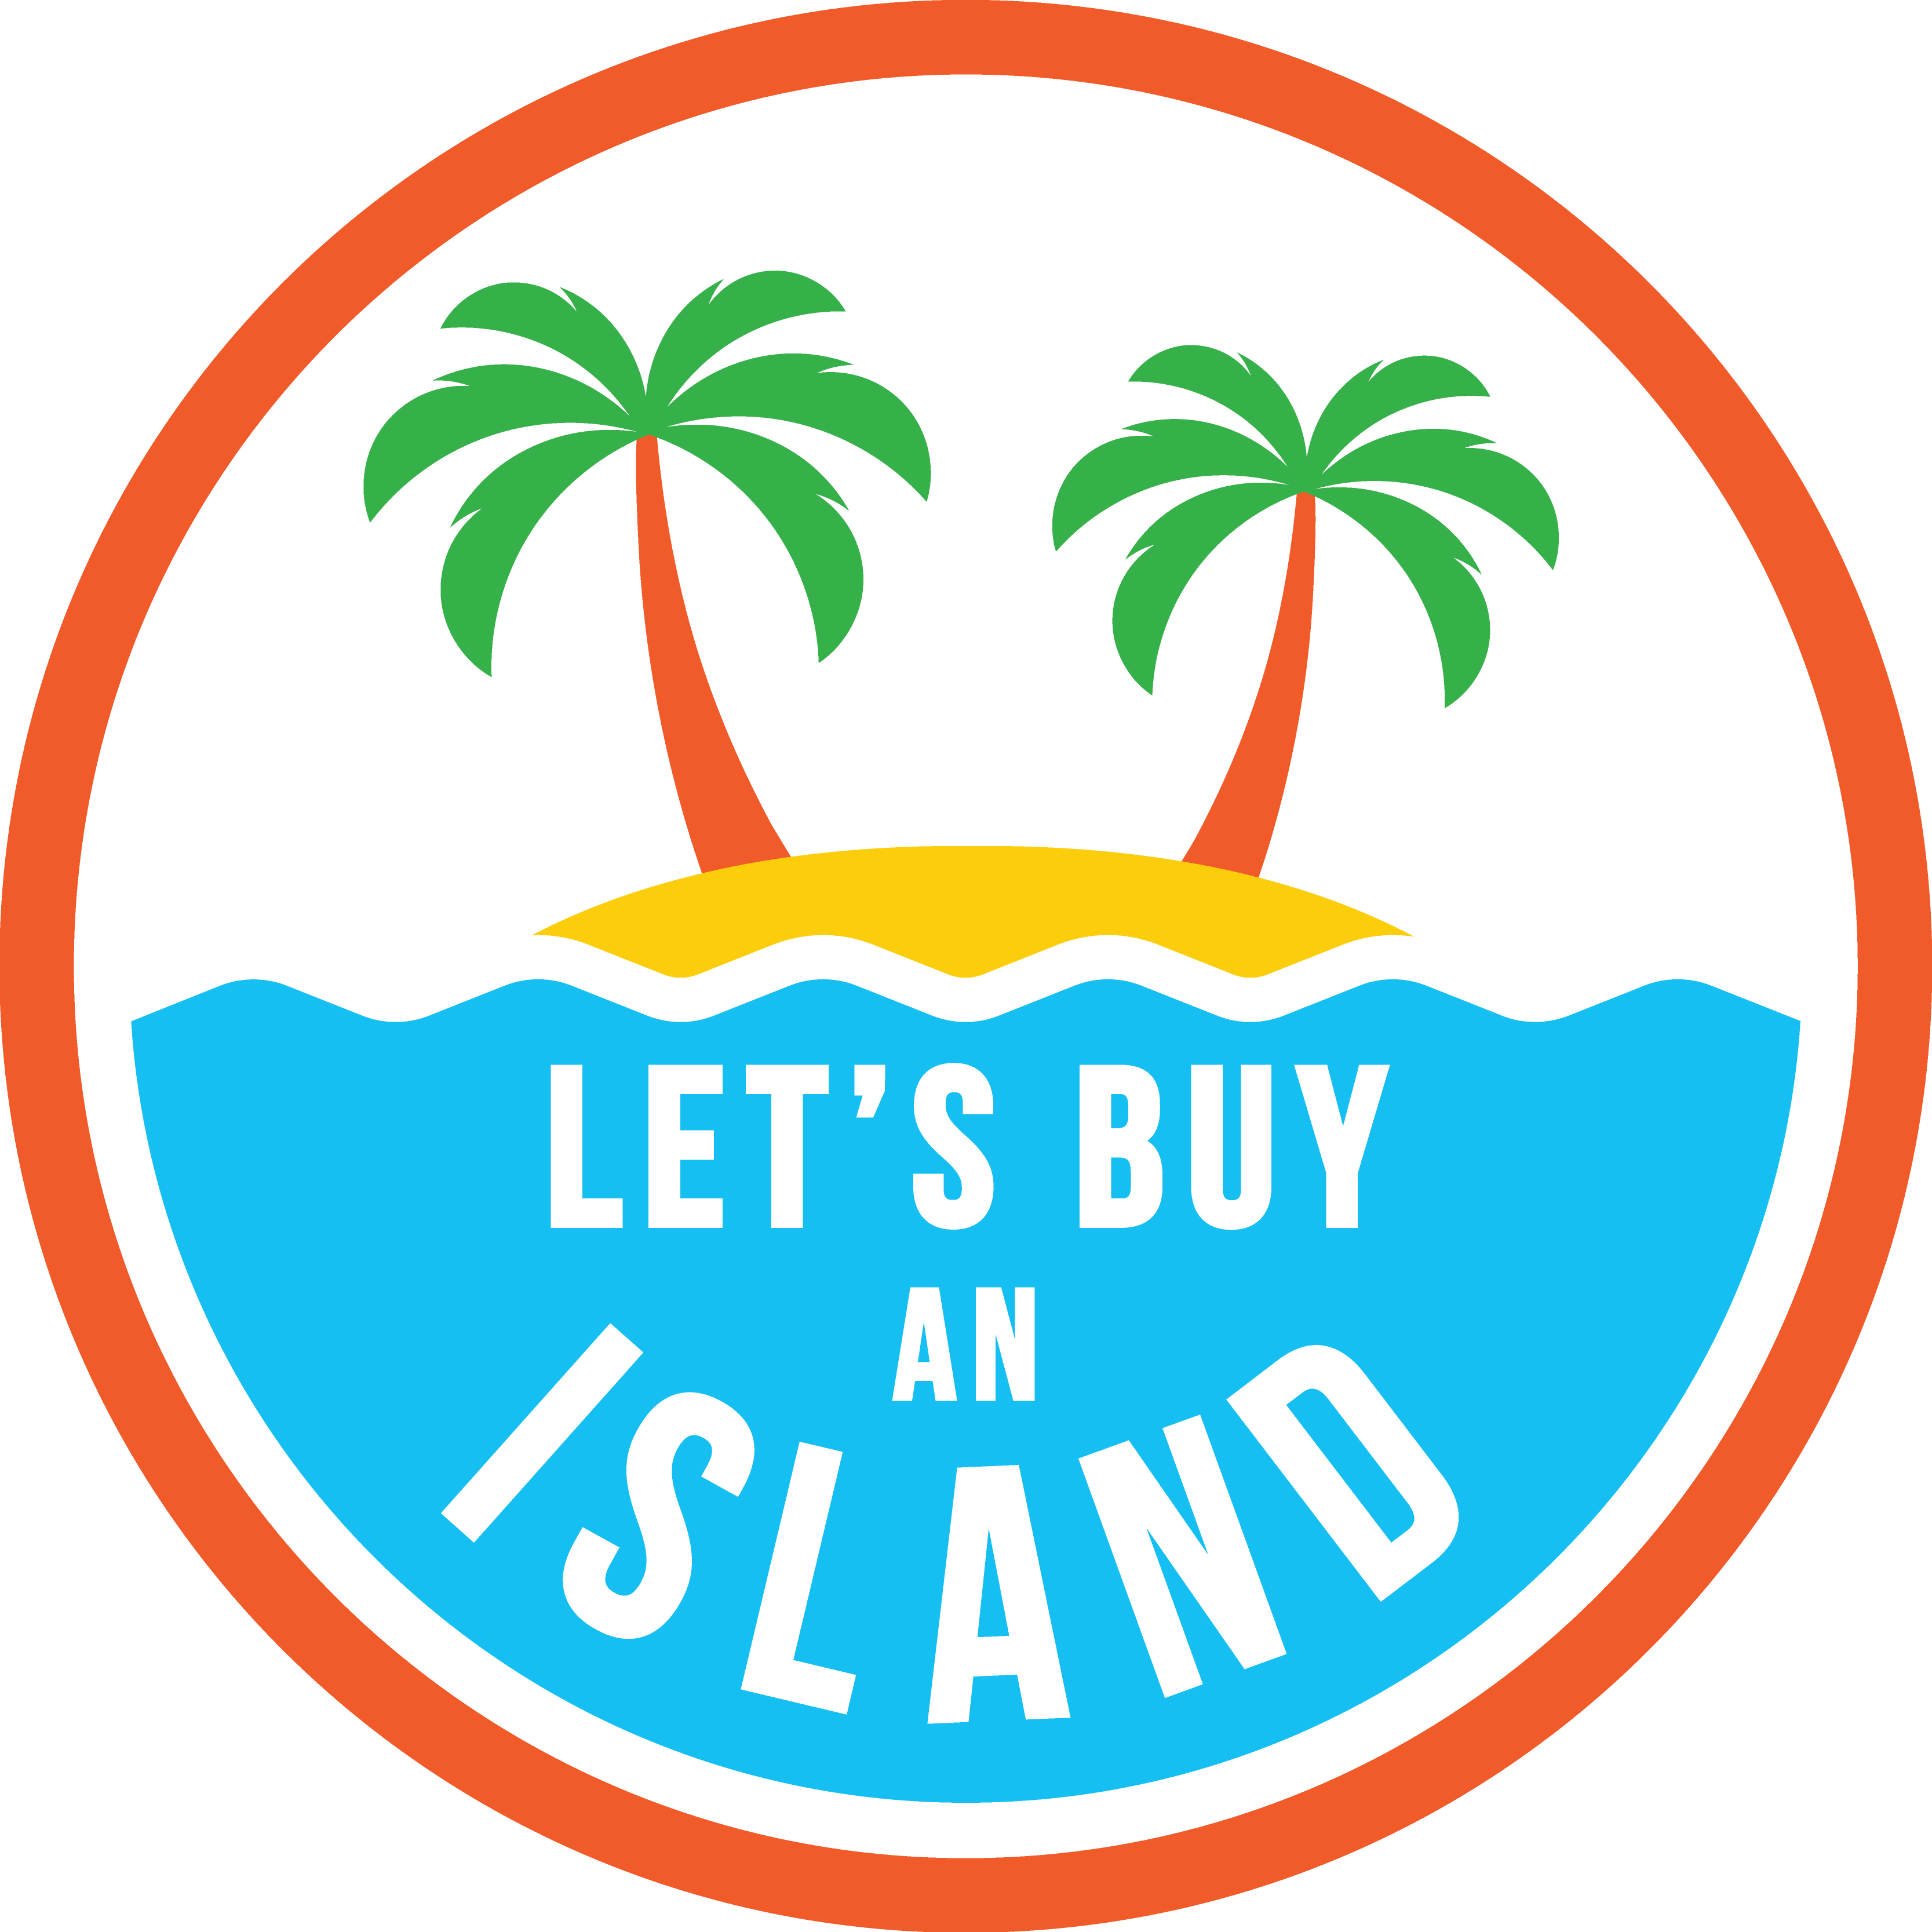 Logo islands. Логотип остров. Острово лого. Buy Island. Tastyisland лого.